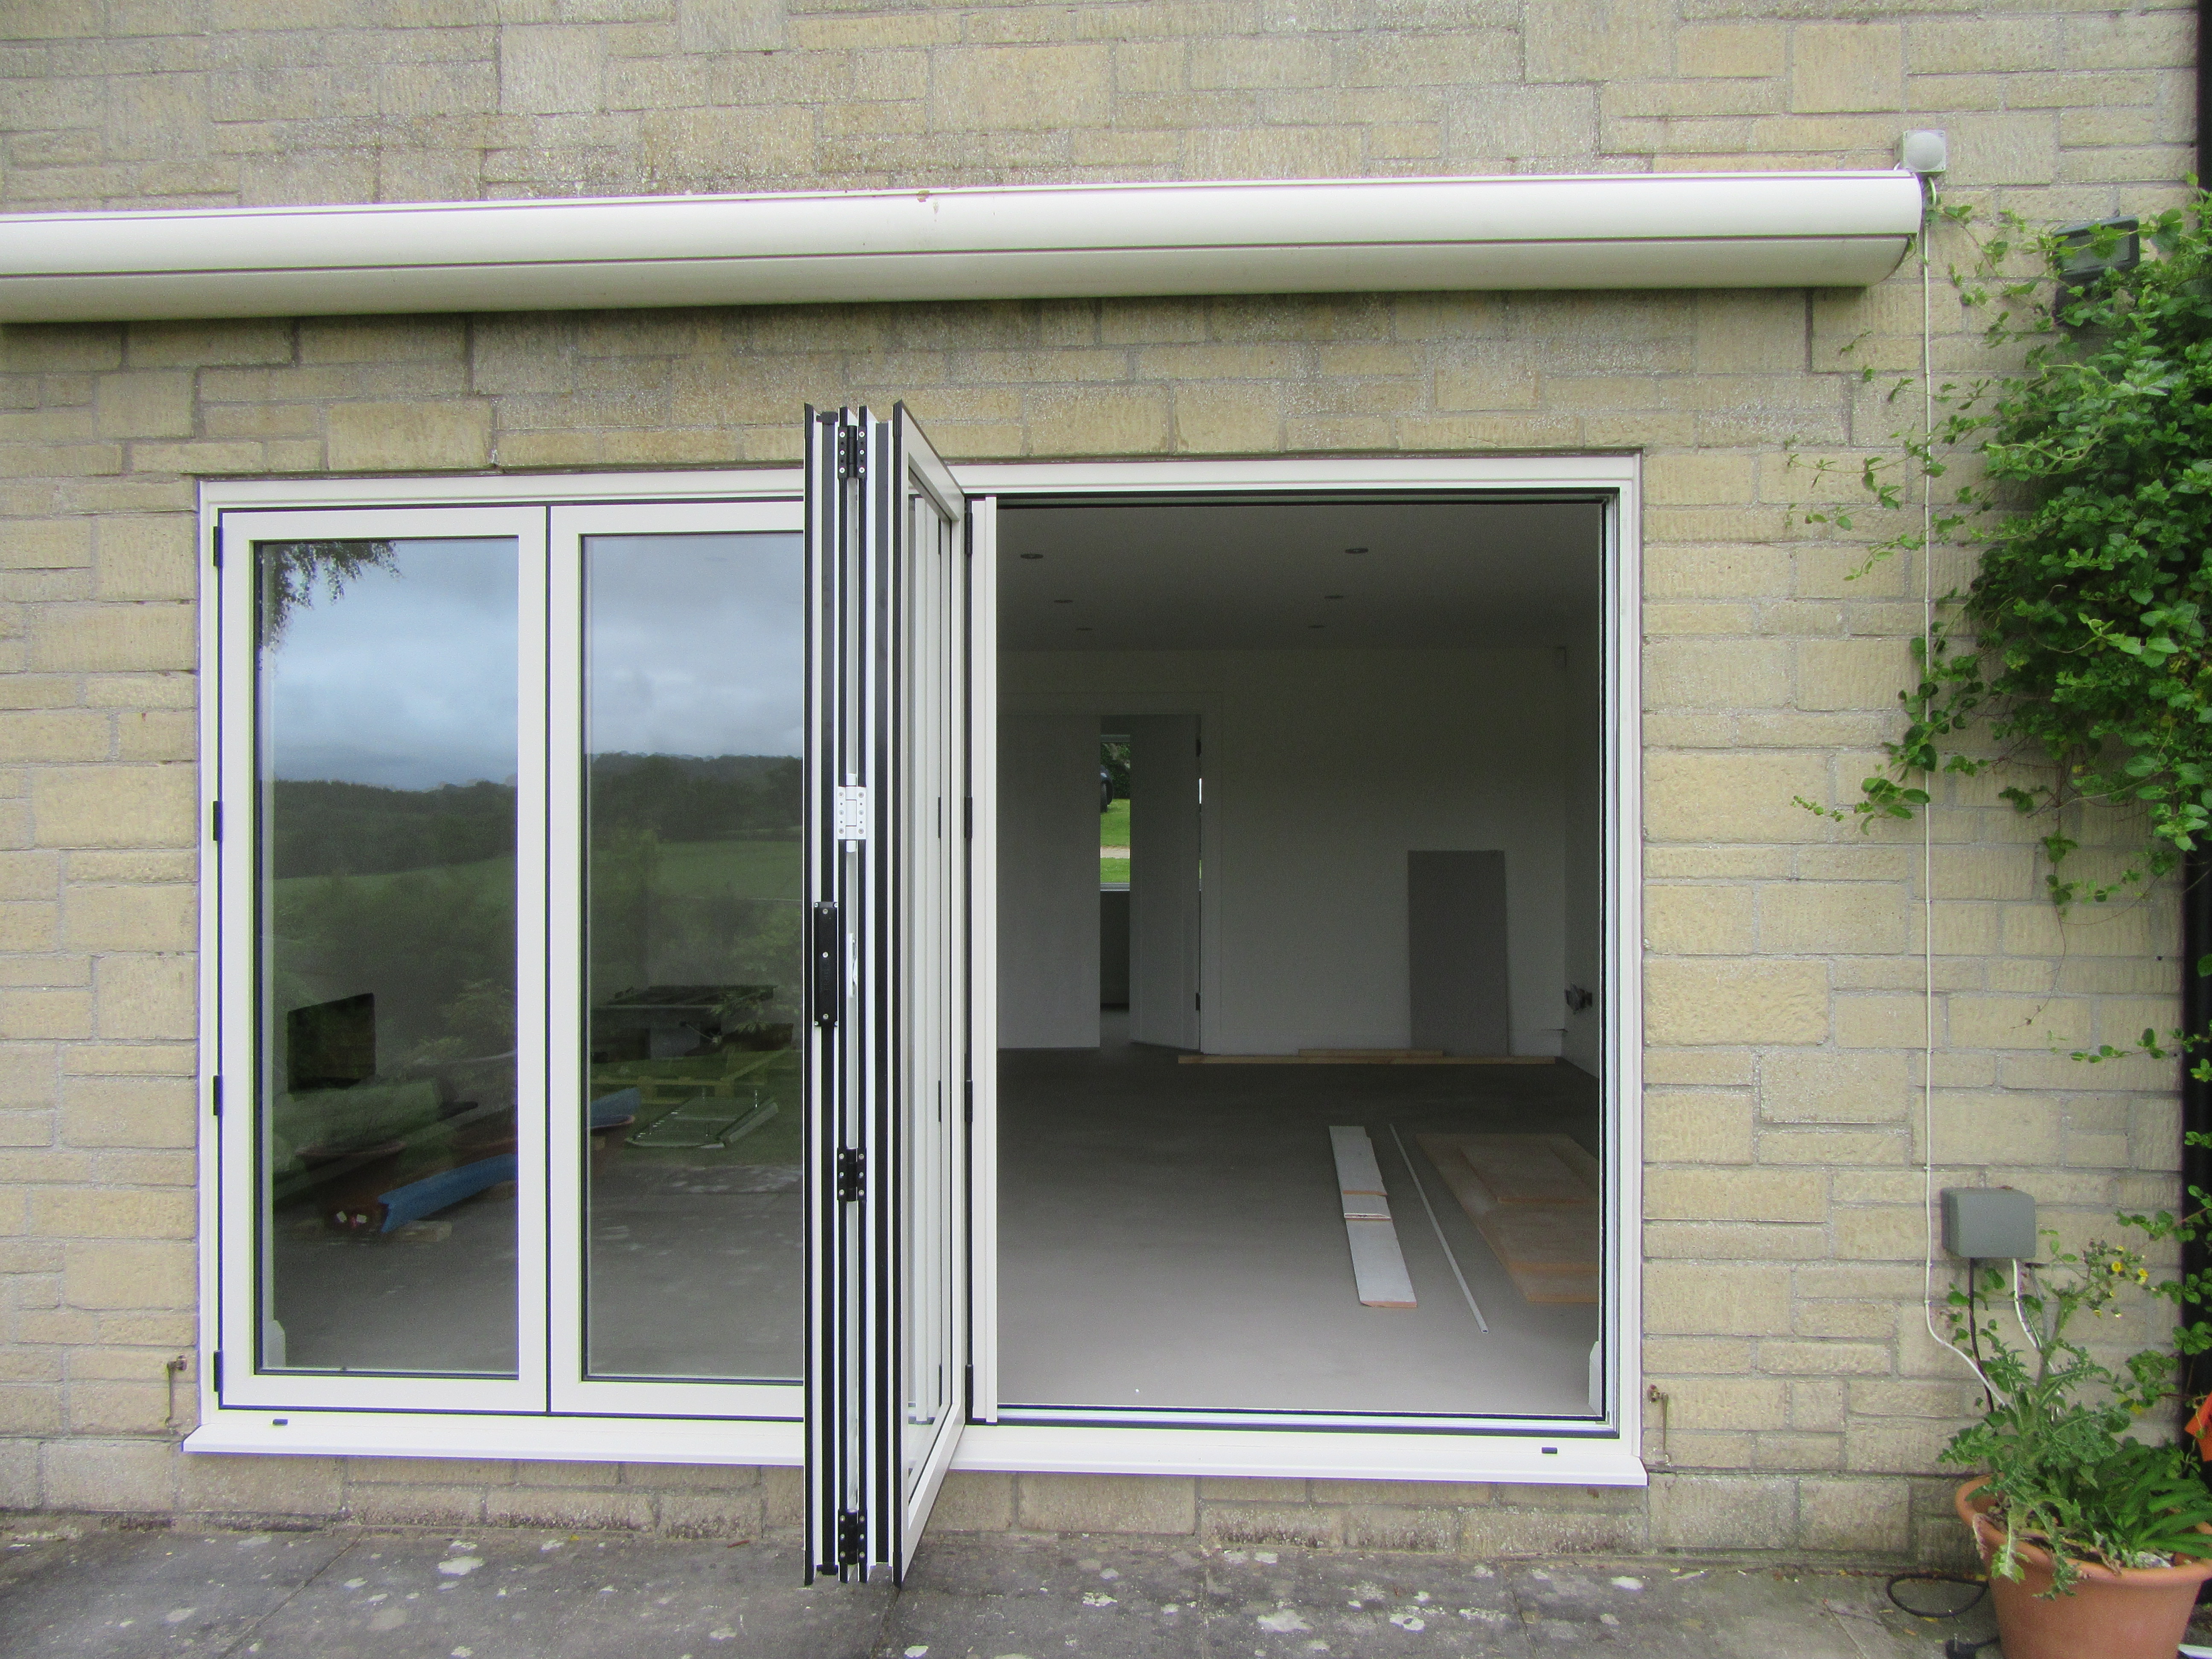 New french doors with Aluminium Bi-Fold leading onto a new patio.